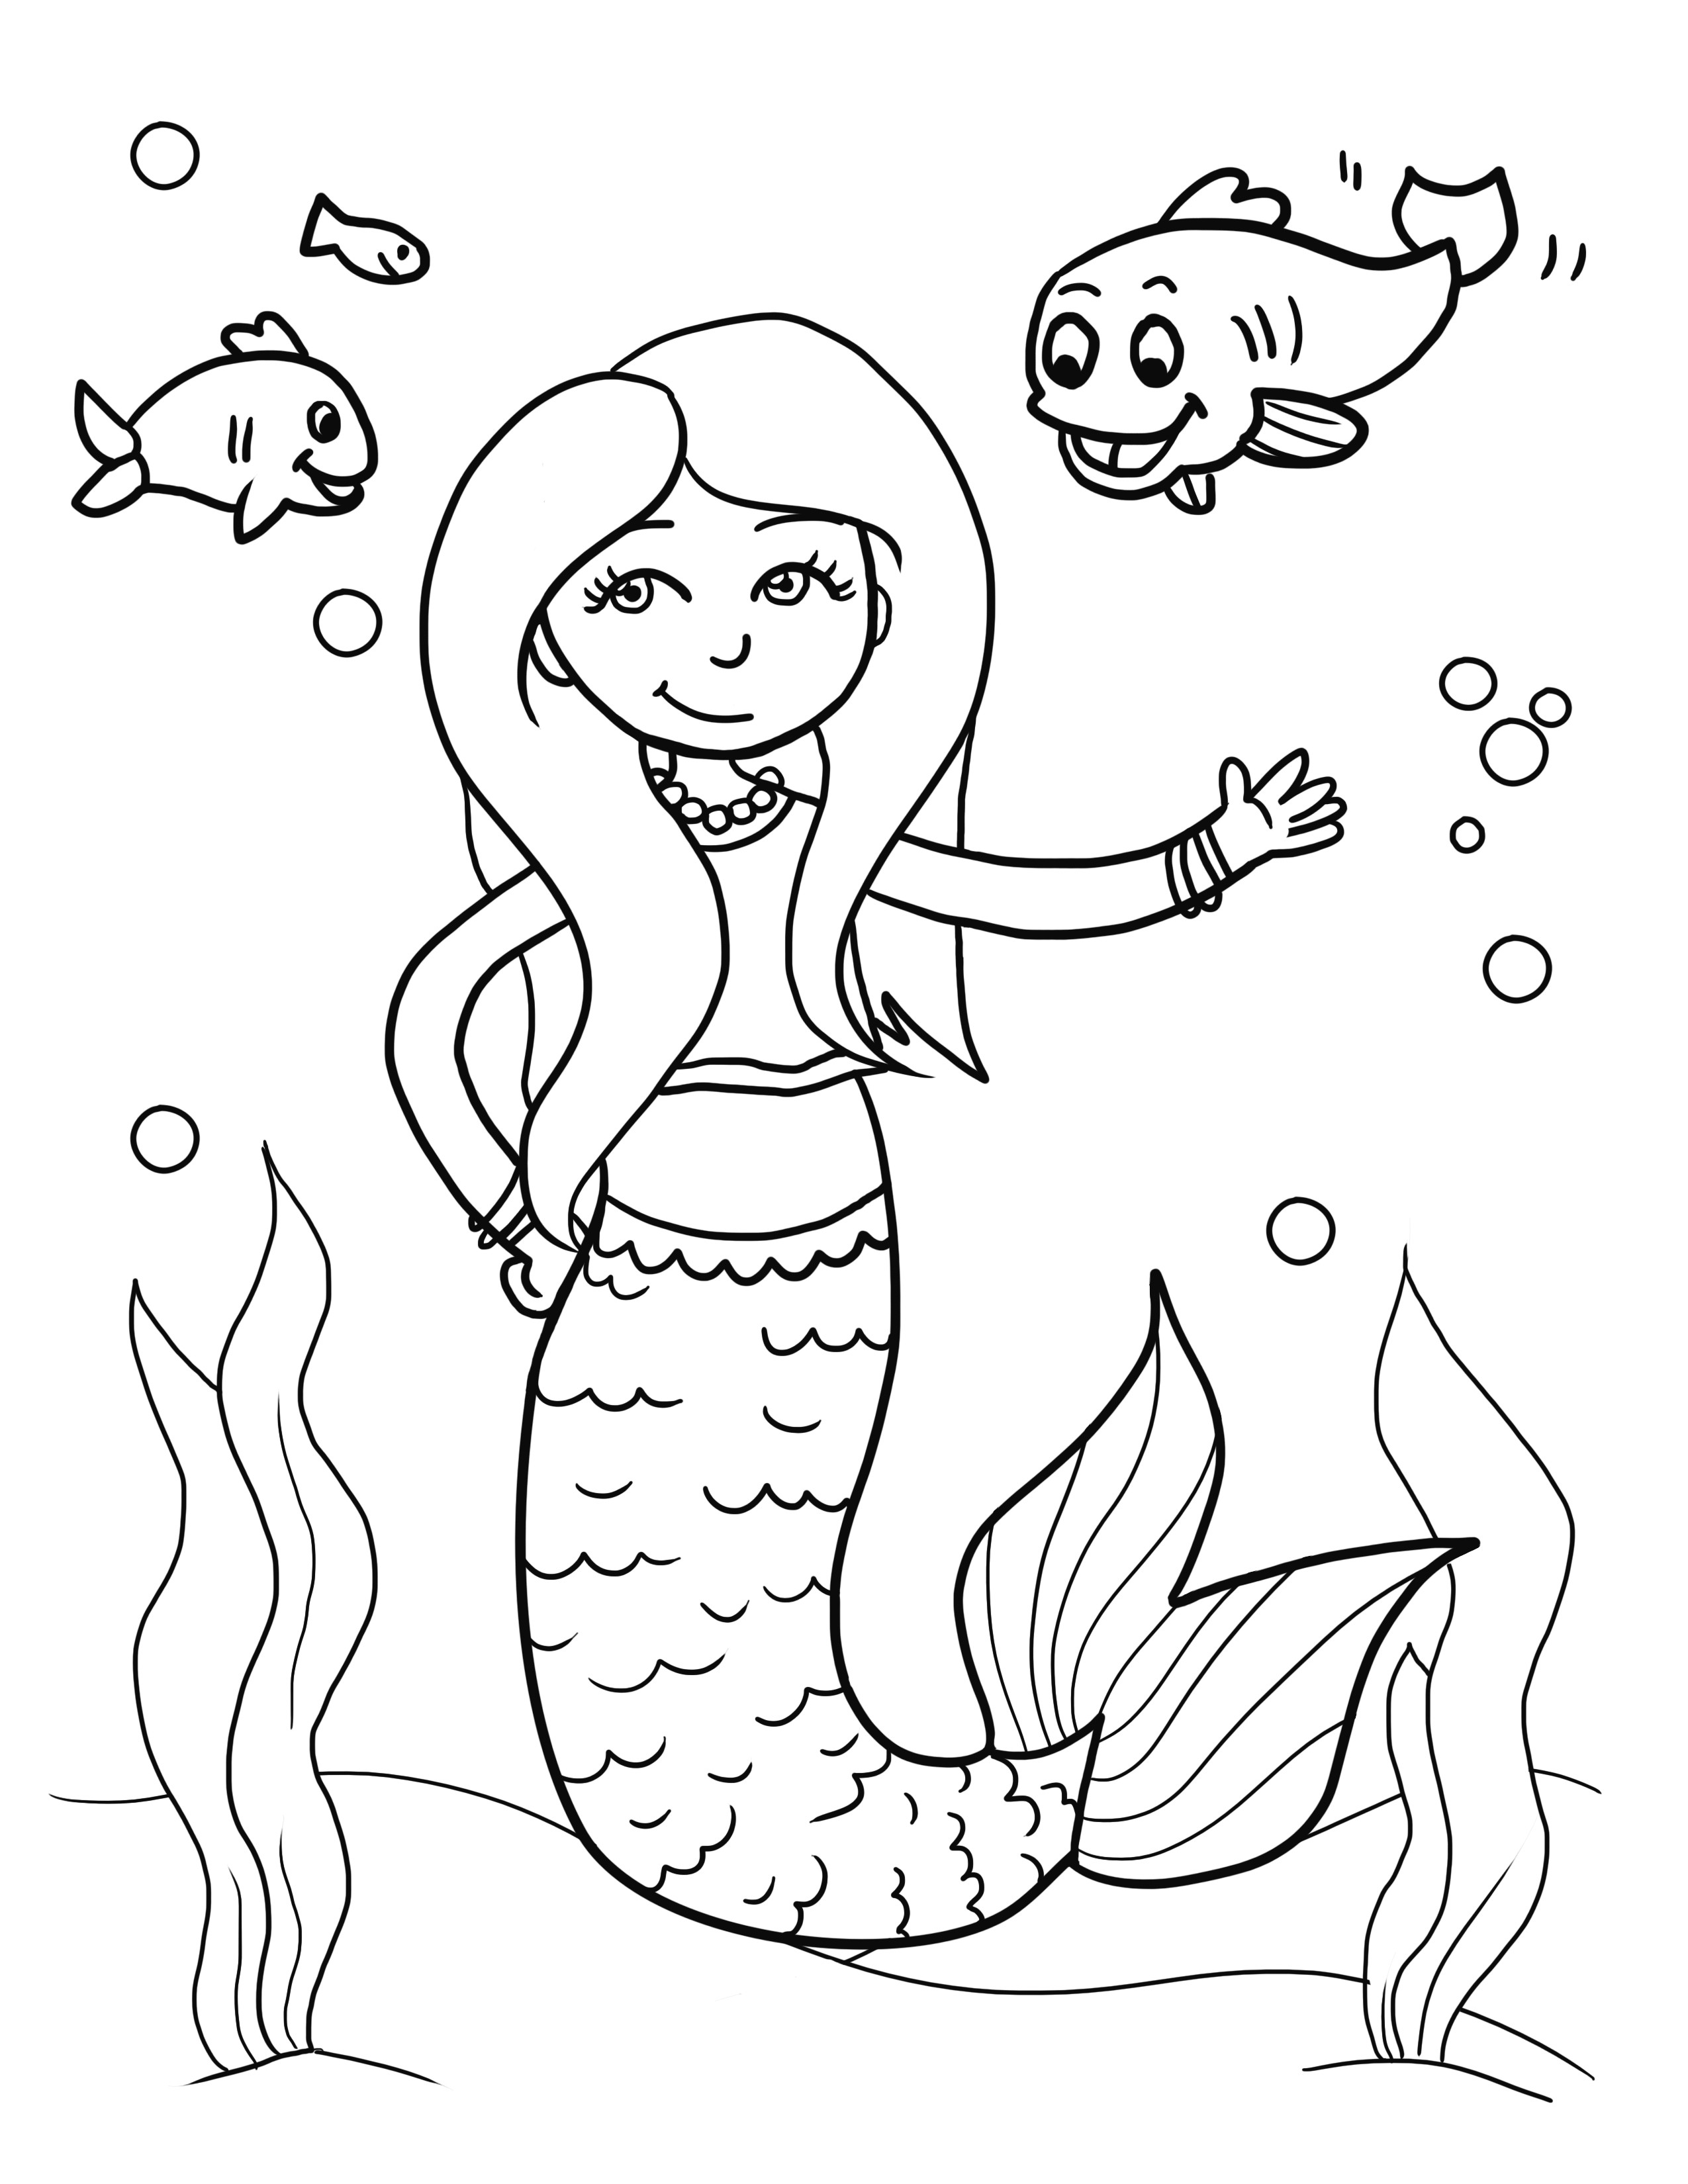 Easy Steps To Draw A Mermaid